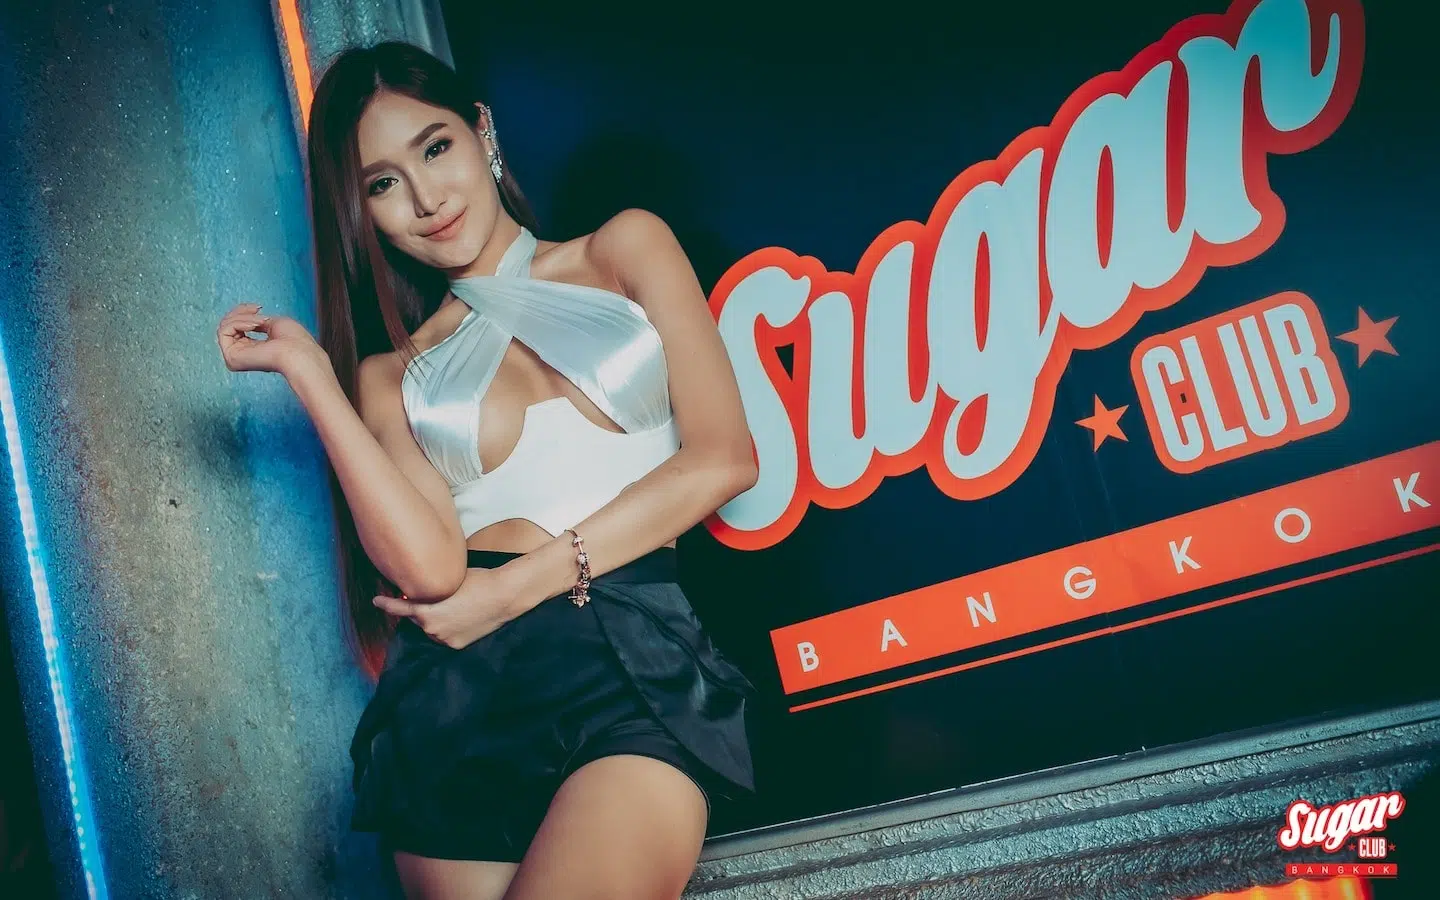 sugar club bangkok sign with Thai girl